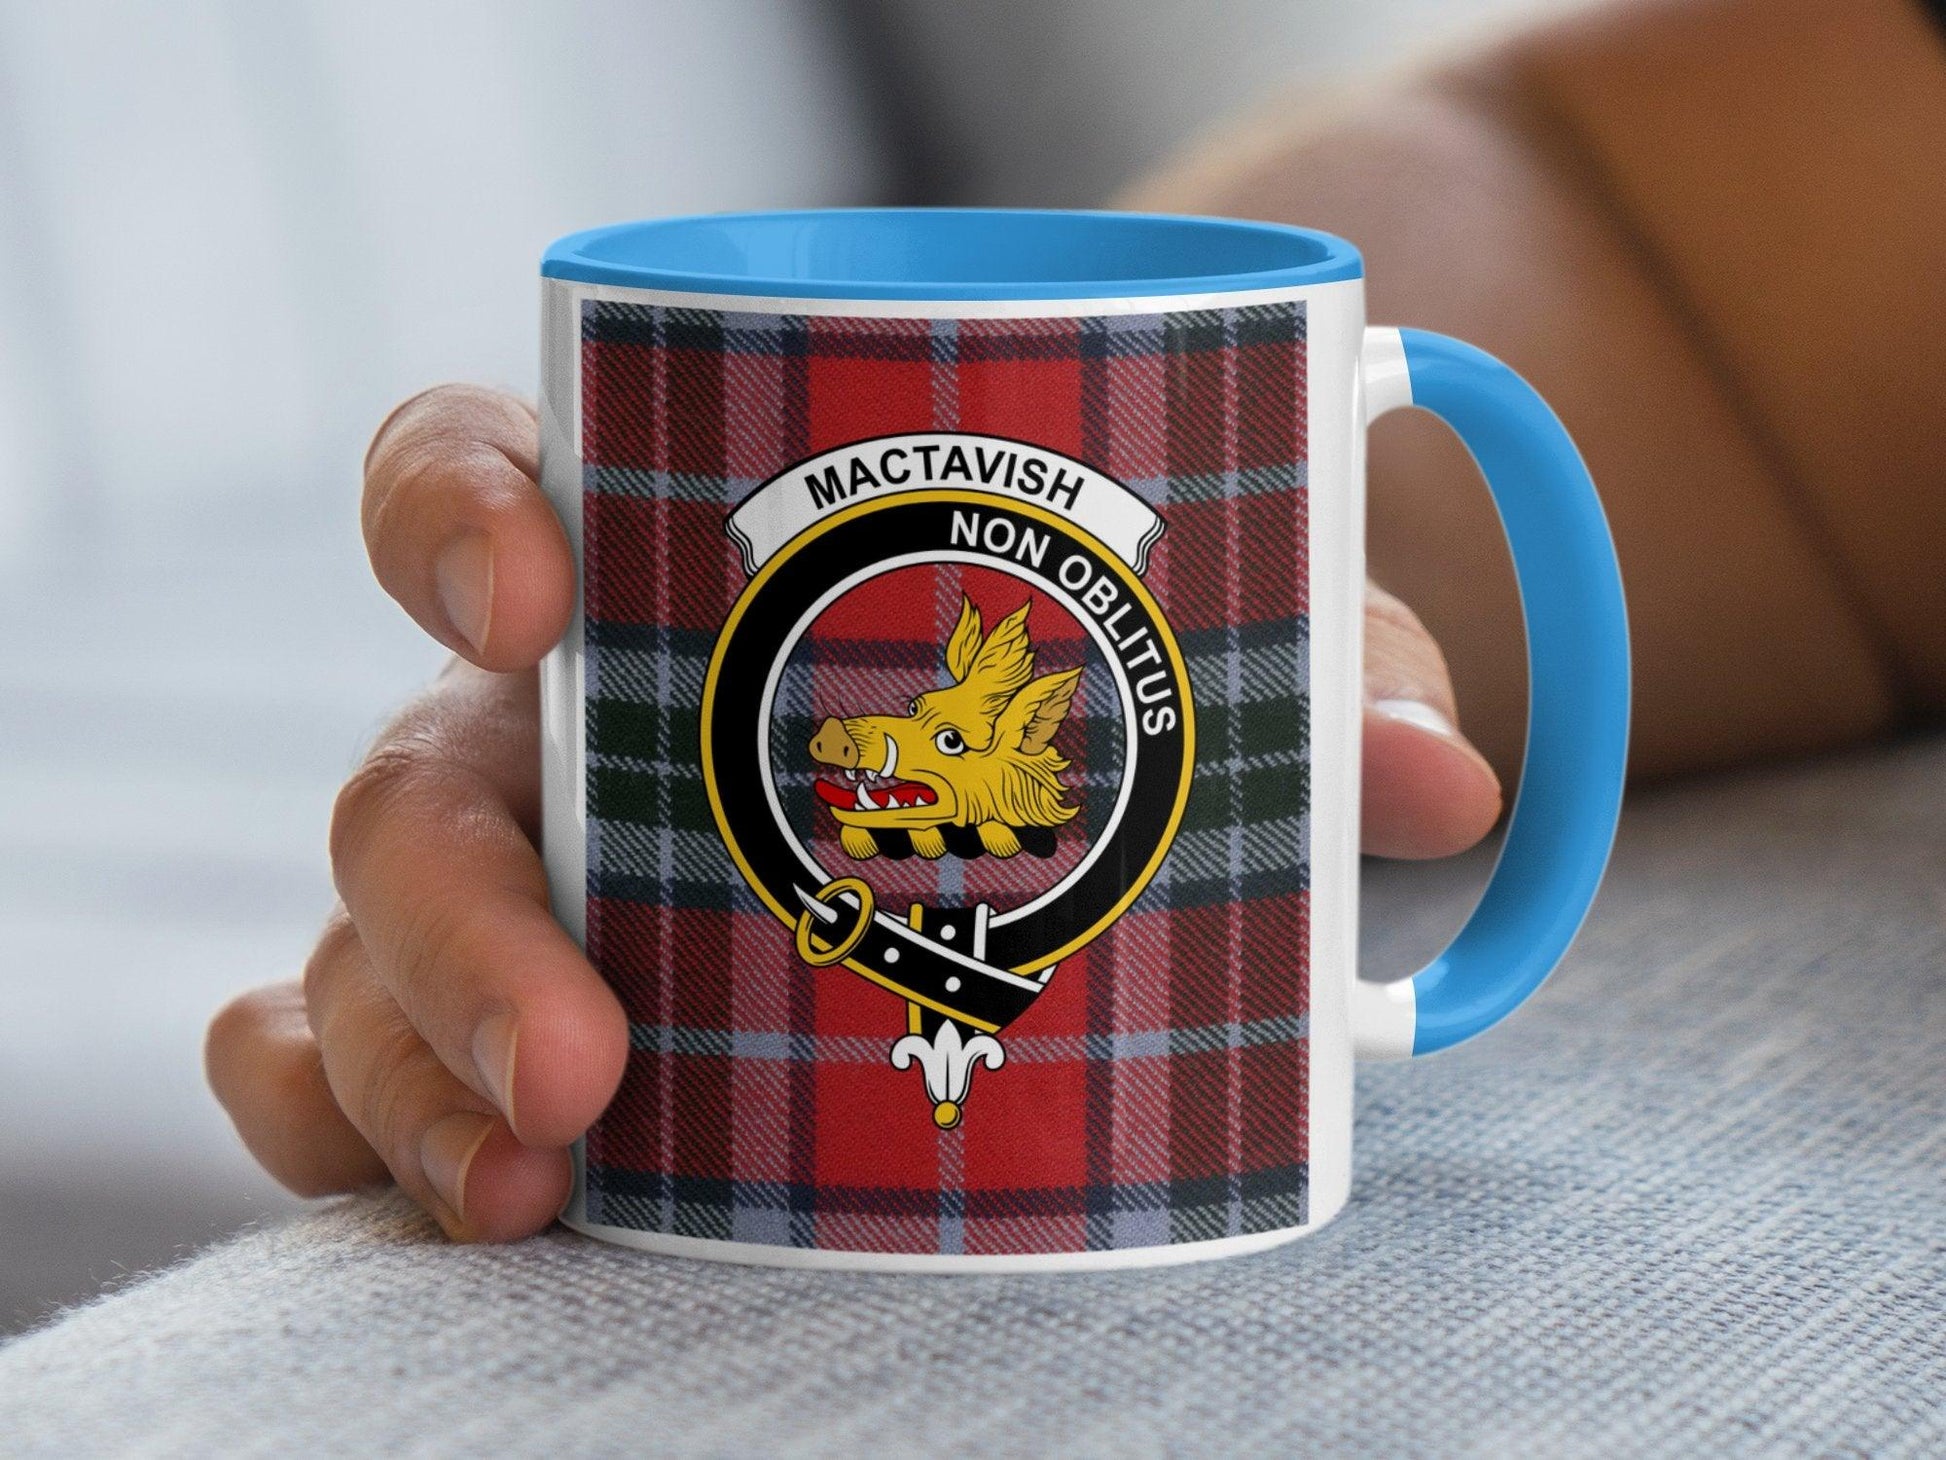 MacTavish Clan Tartan Mug with Authentic Crest Design Mug - Living Stone Gifts